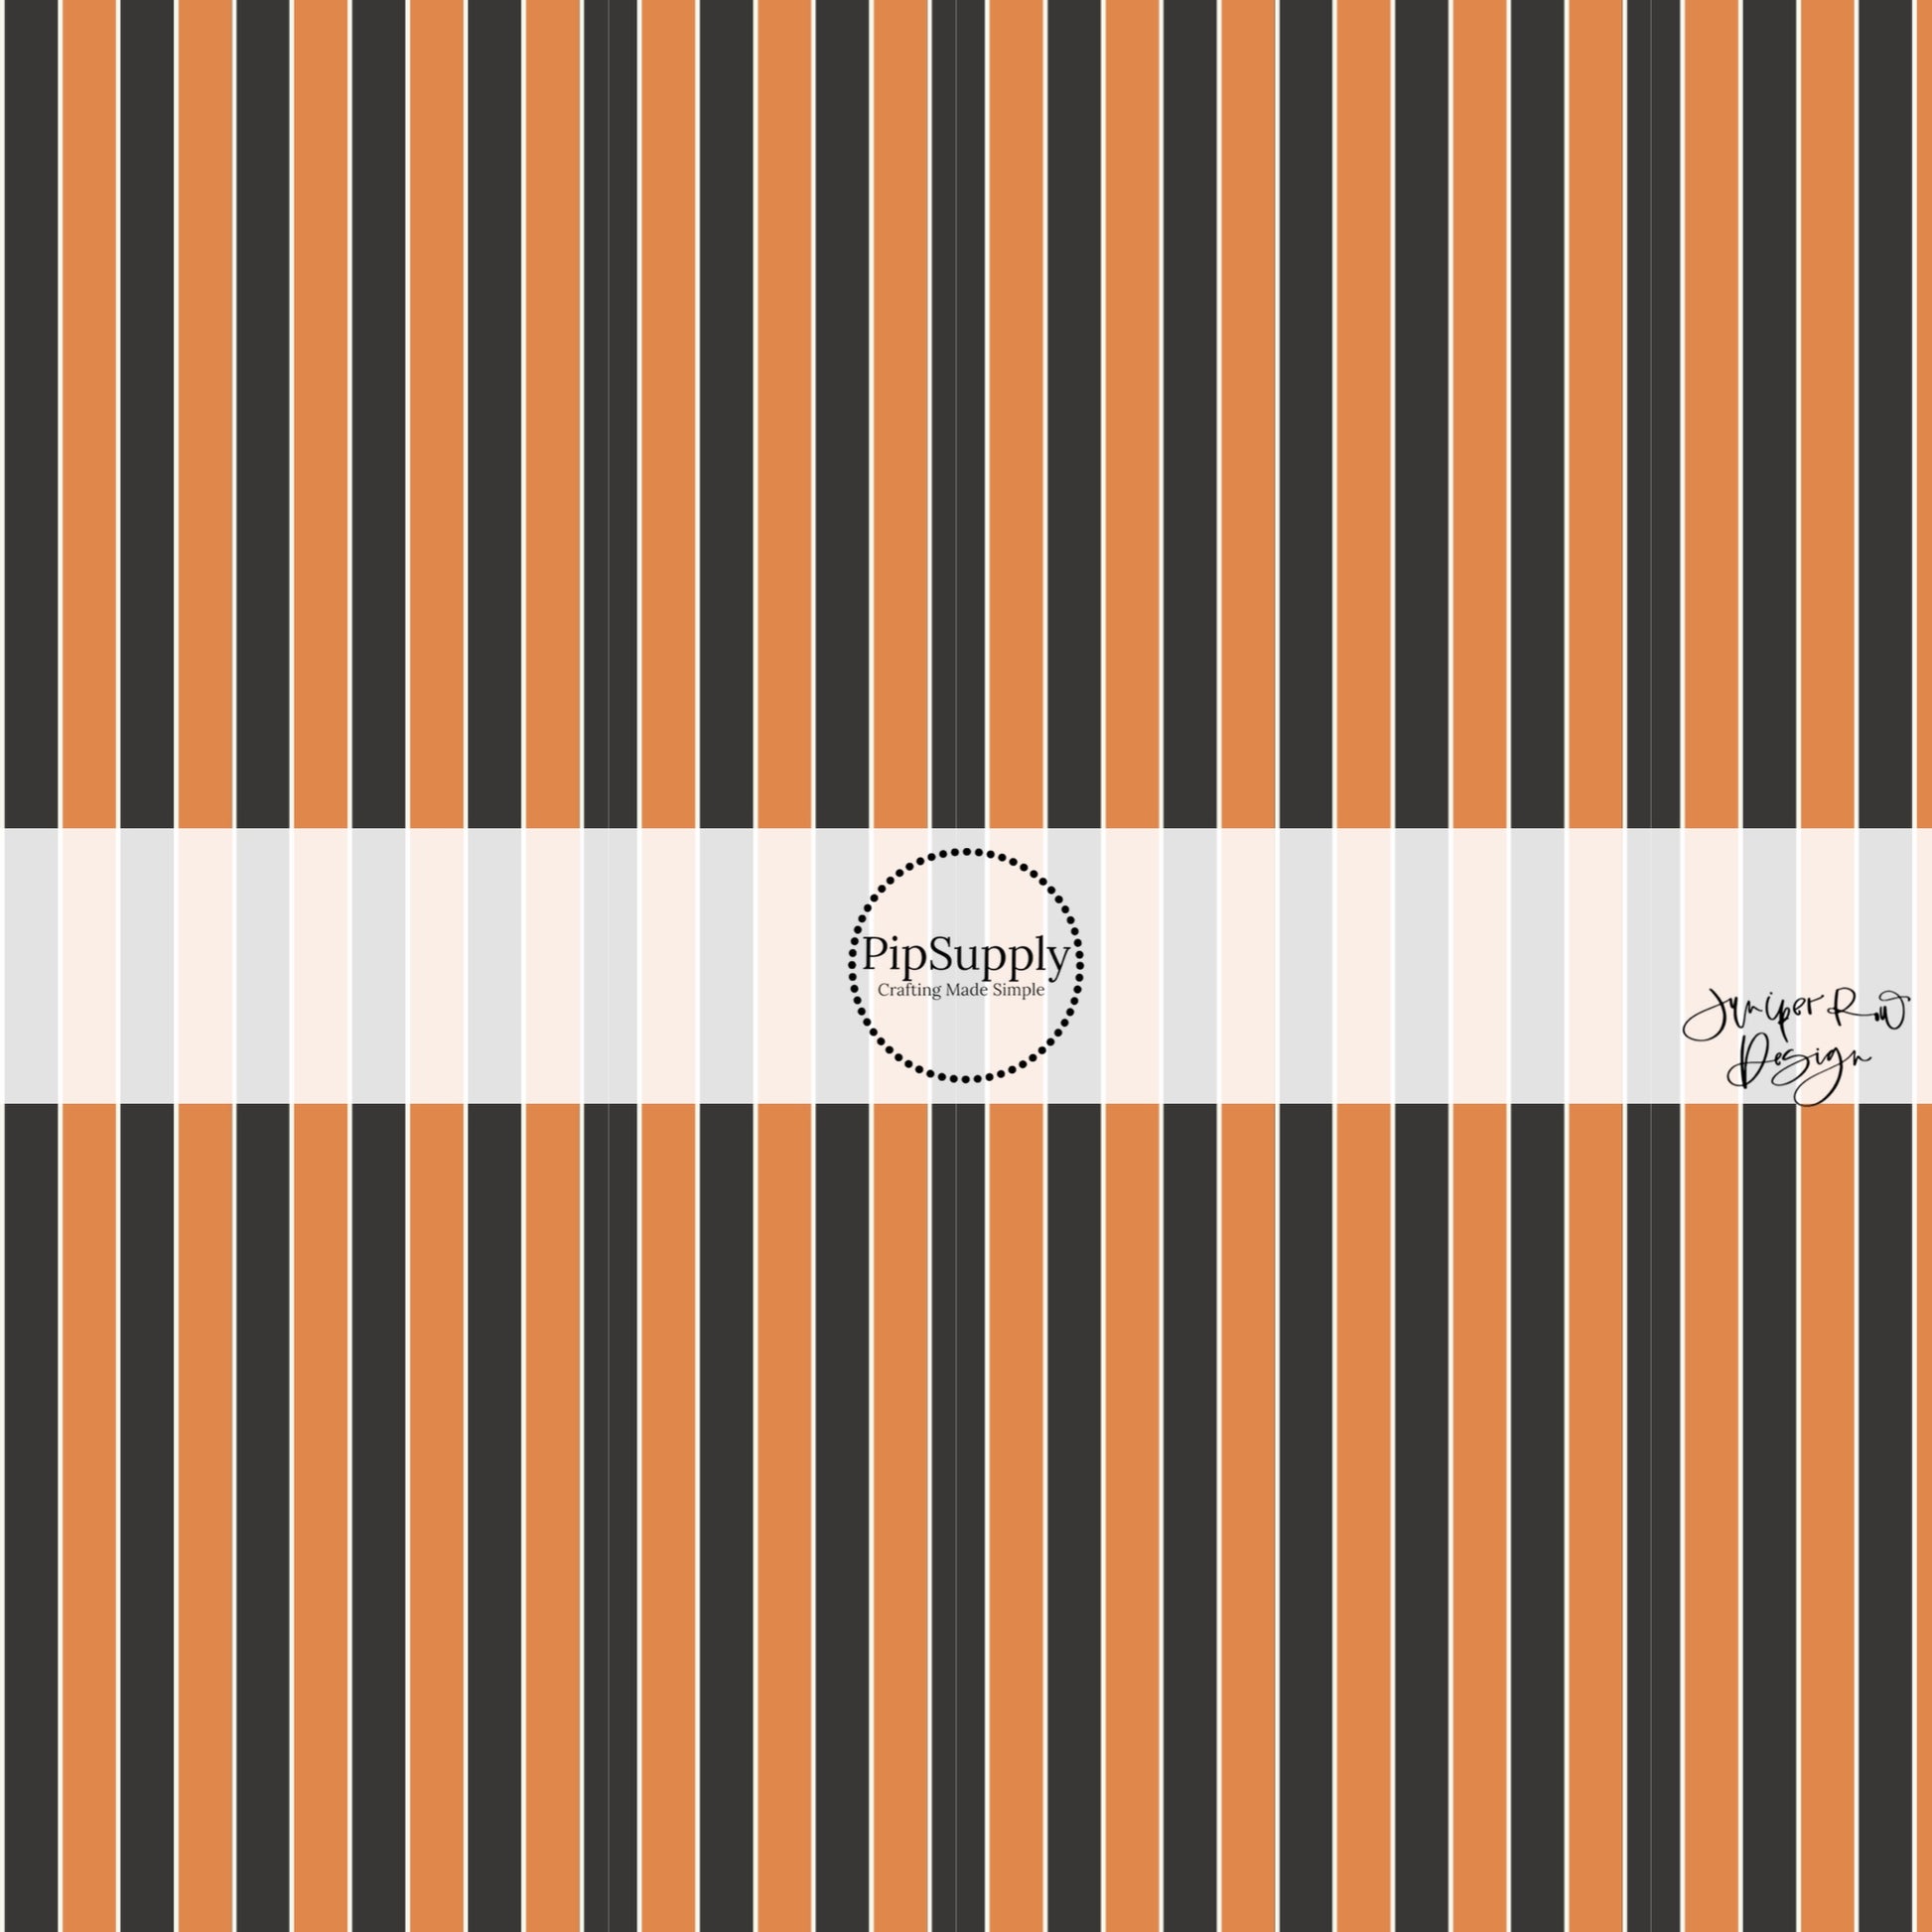 Thin white lines on black and orange stripes hair bow strips